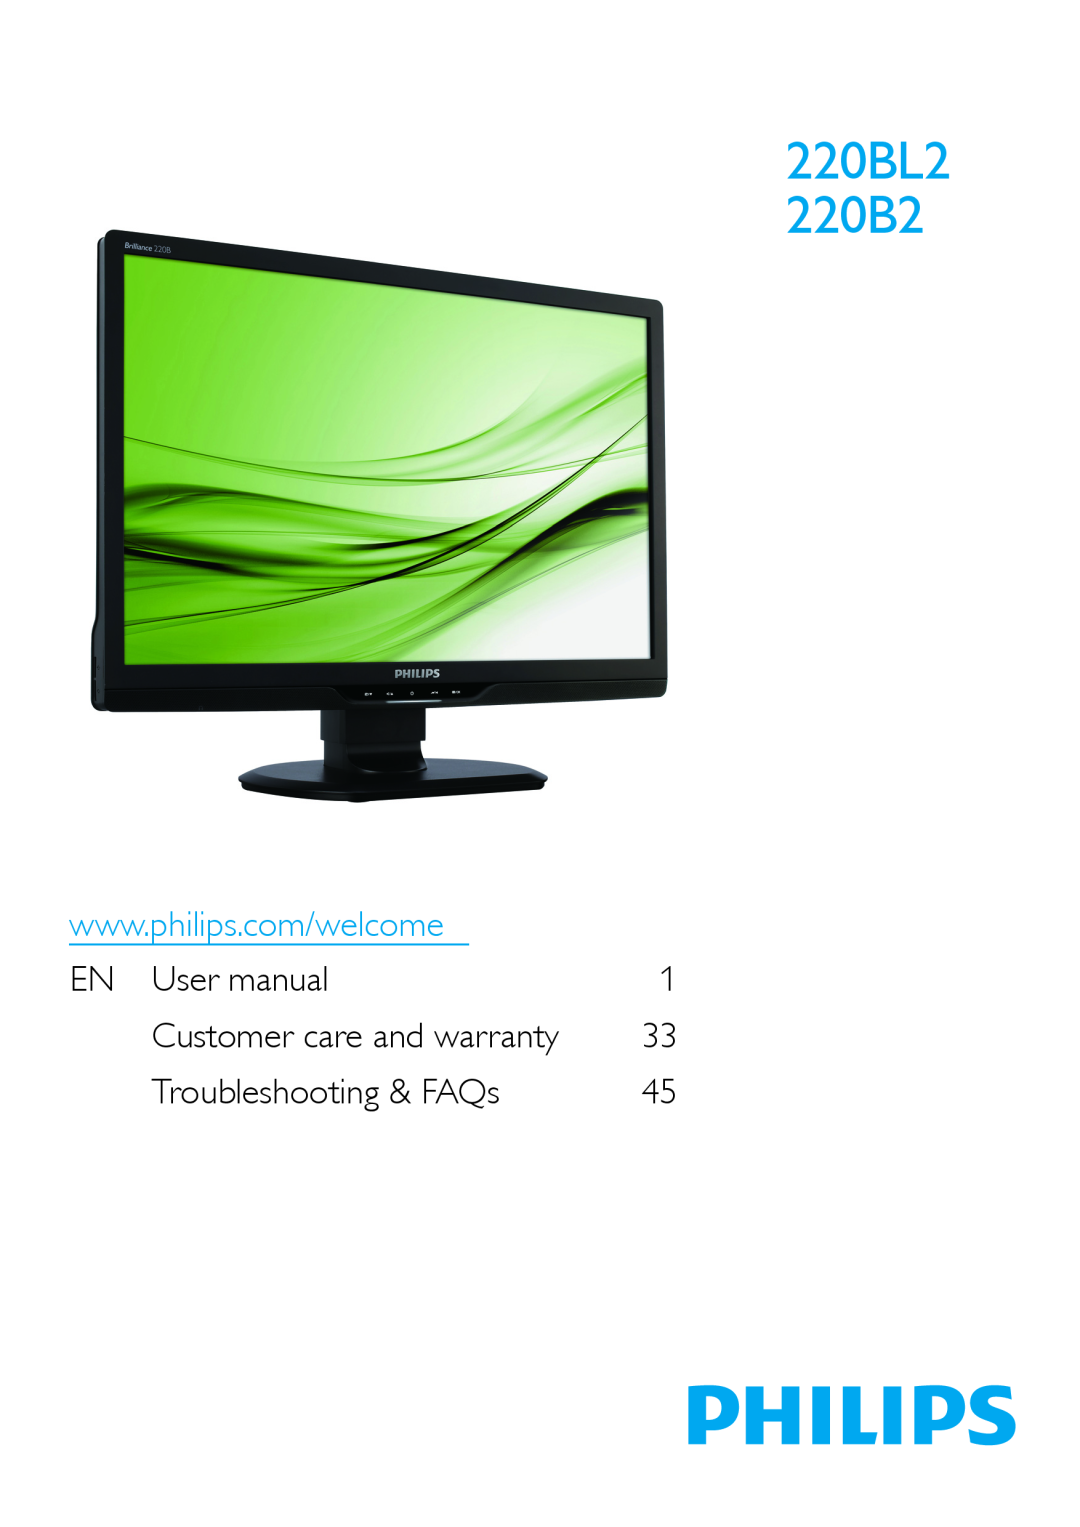 Philips 220B2CS/00 user manual Troubleshooting & FAQs, 220BL2 220B2, Customer care and warranty 